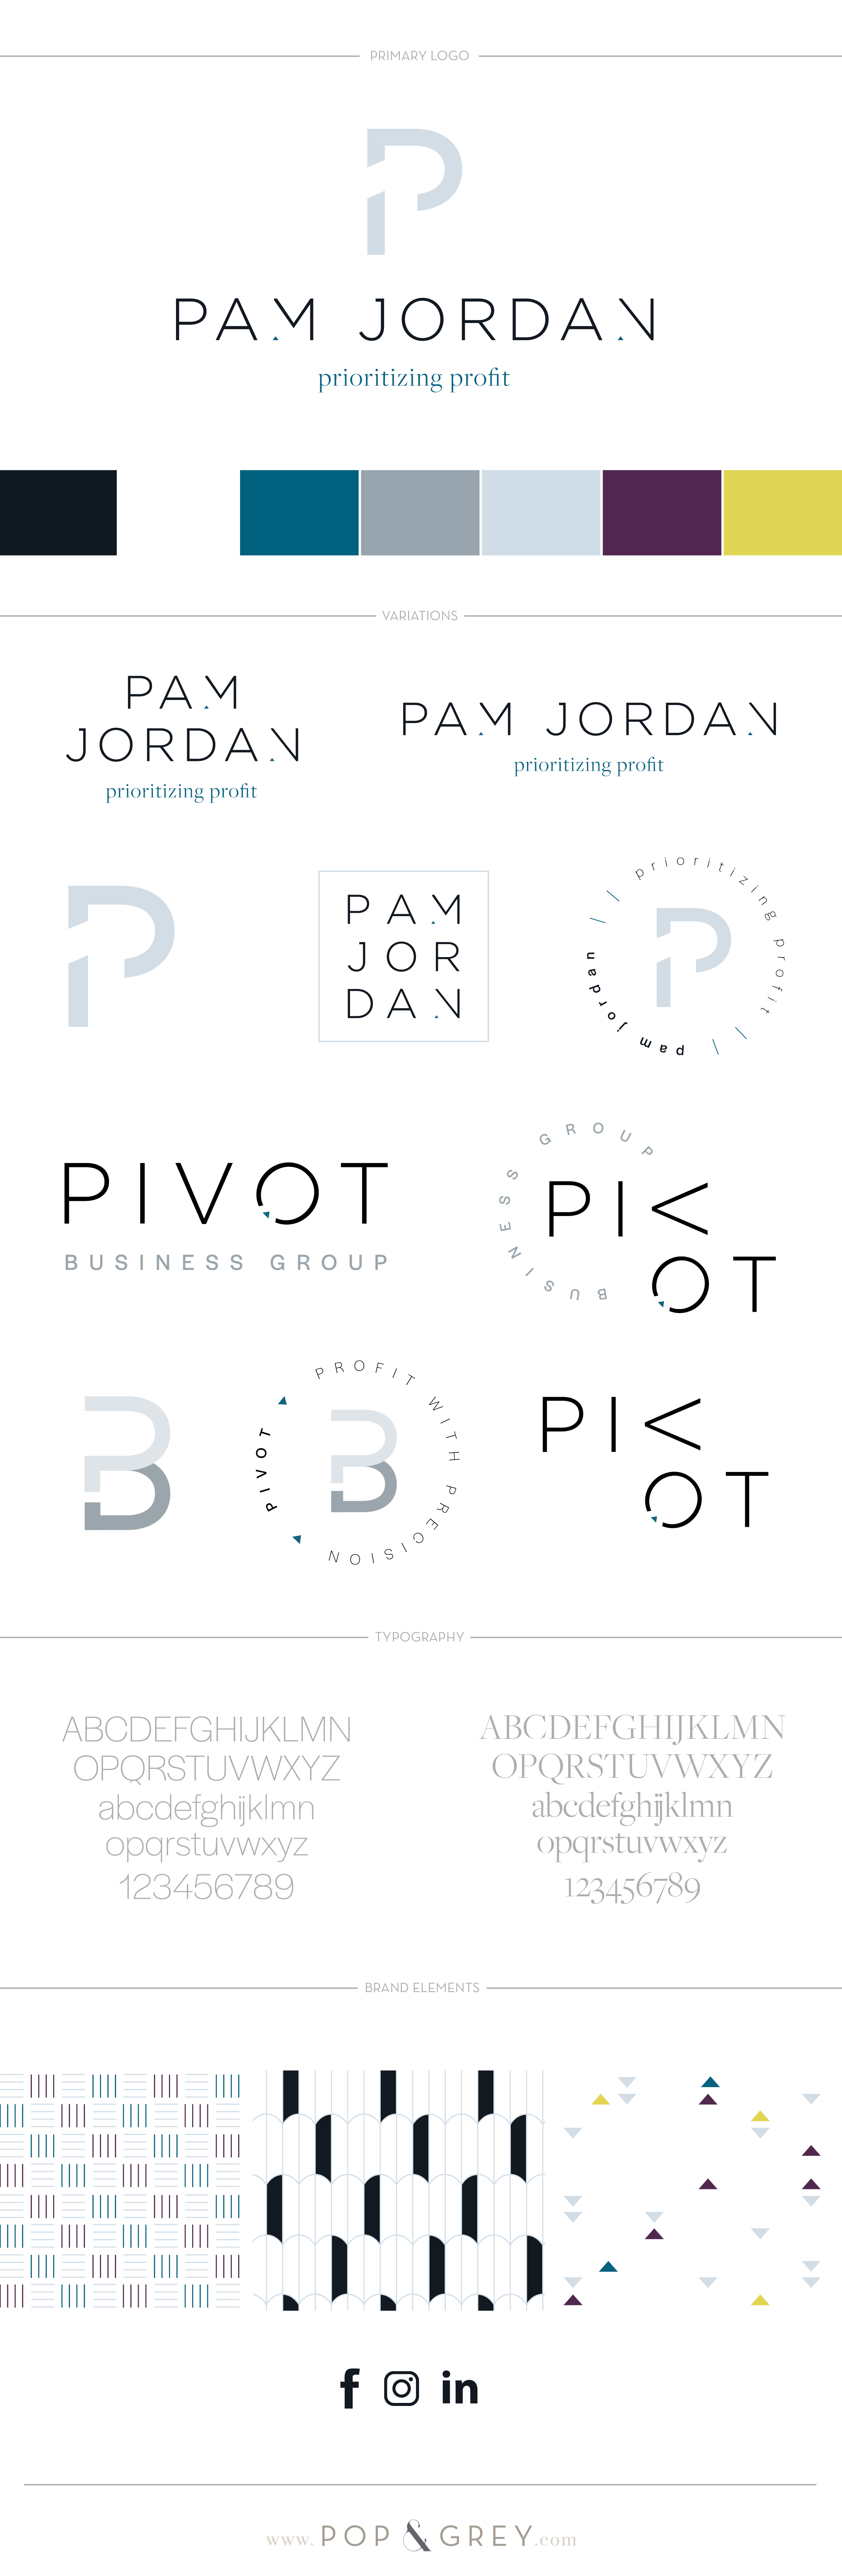 pam jordan, cfo and pivot business group brand design by pop & grey